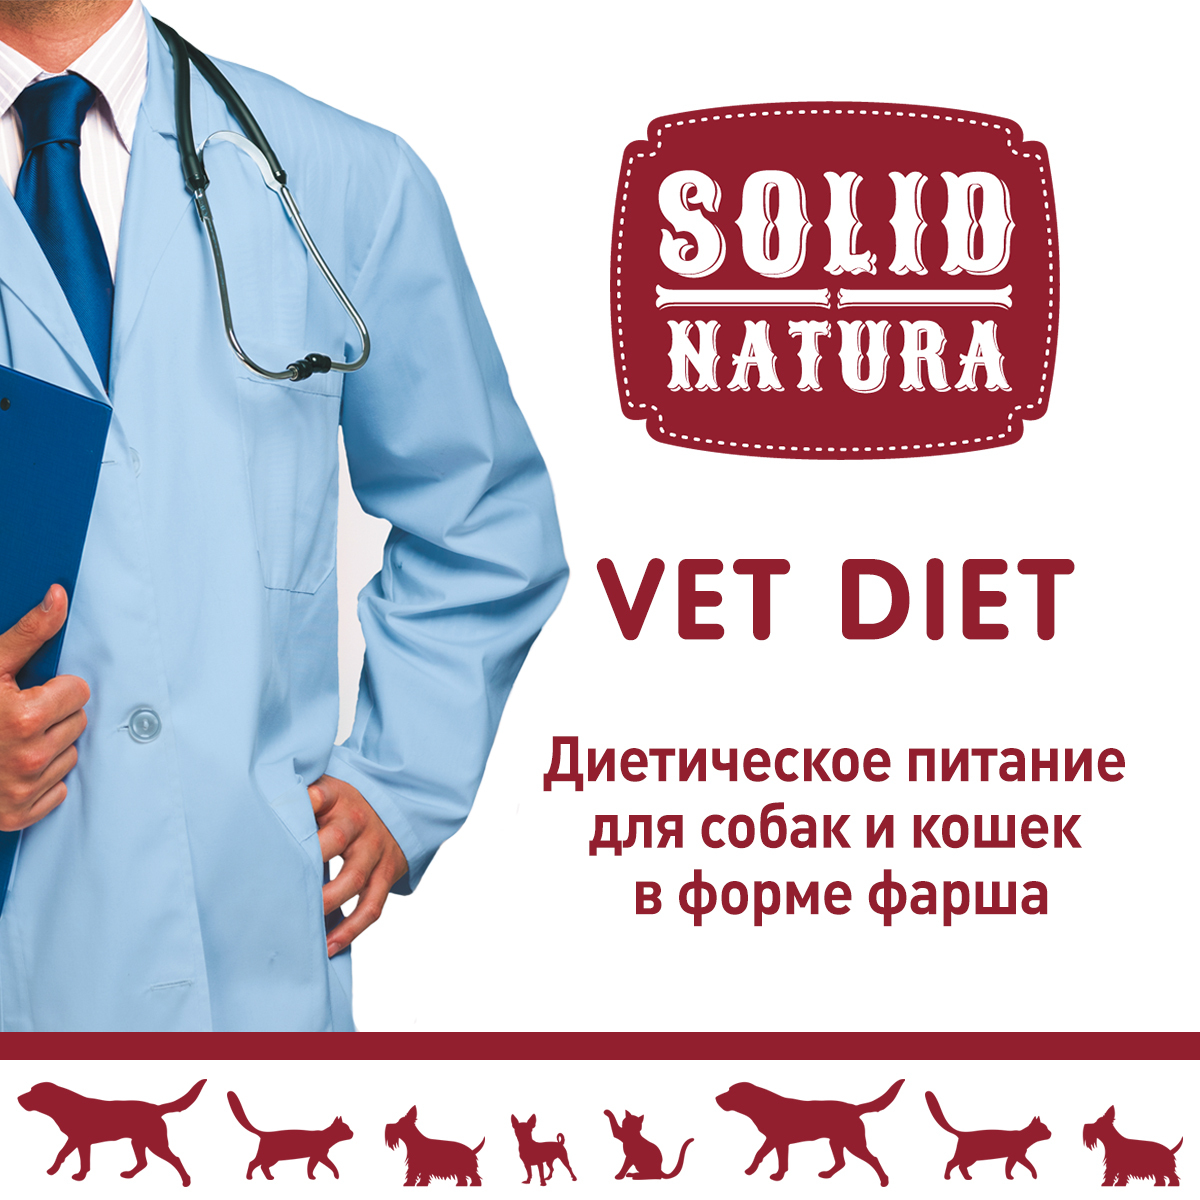 Solid natura vet. Hepatic Солид натура. Влажный корм Solid Natura vet Recovery support диета для кошек и собак. Solid Natura vet renal. Солид натура рекавери.